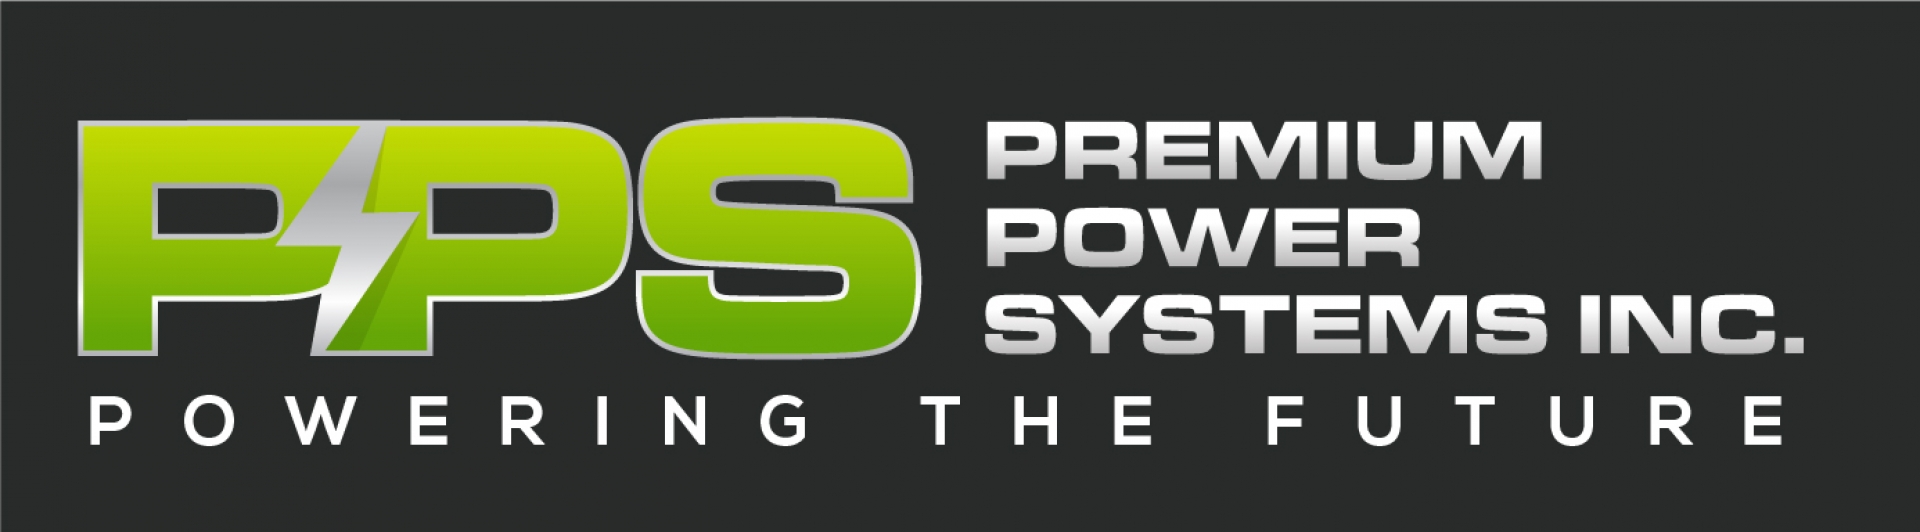 Premium Power Systems Inc. company logo